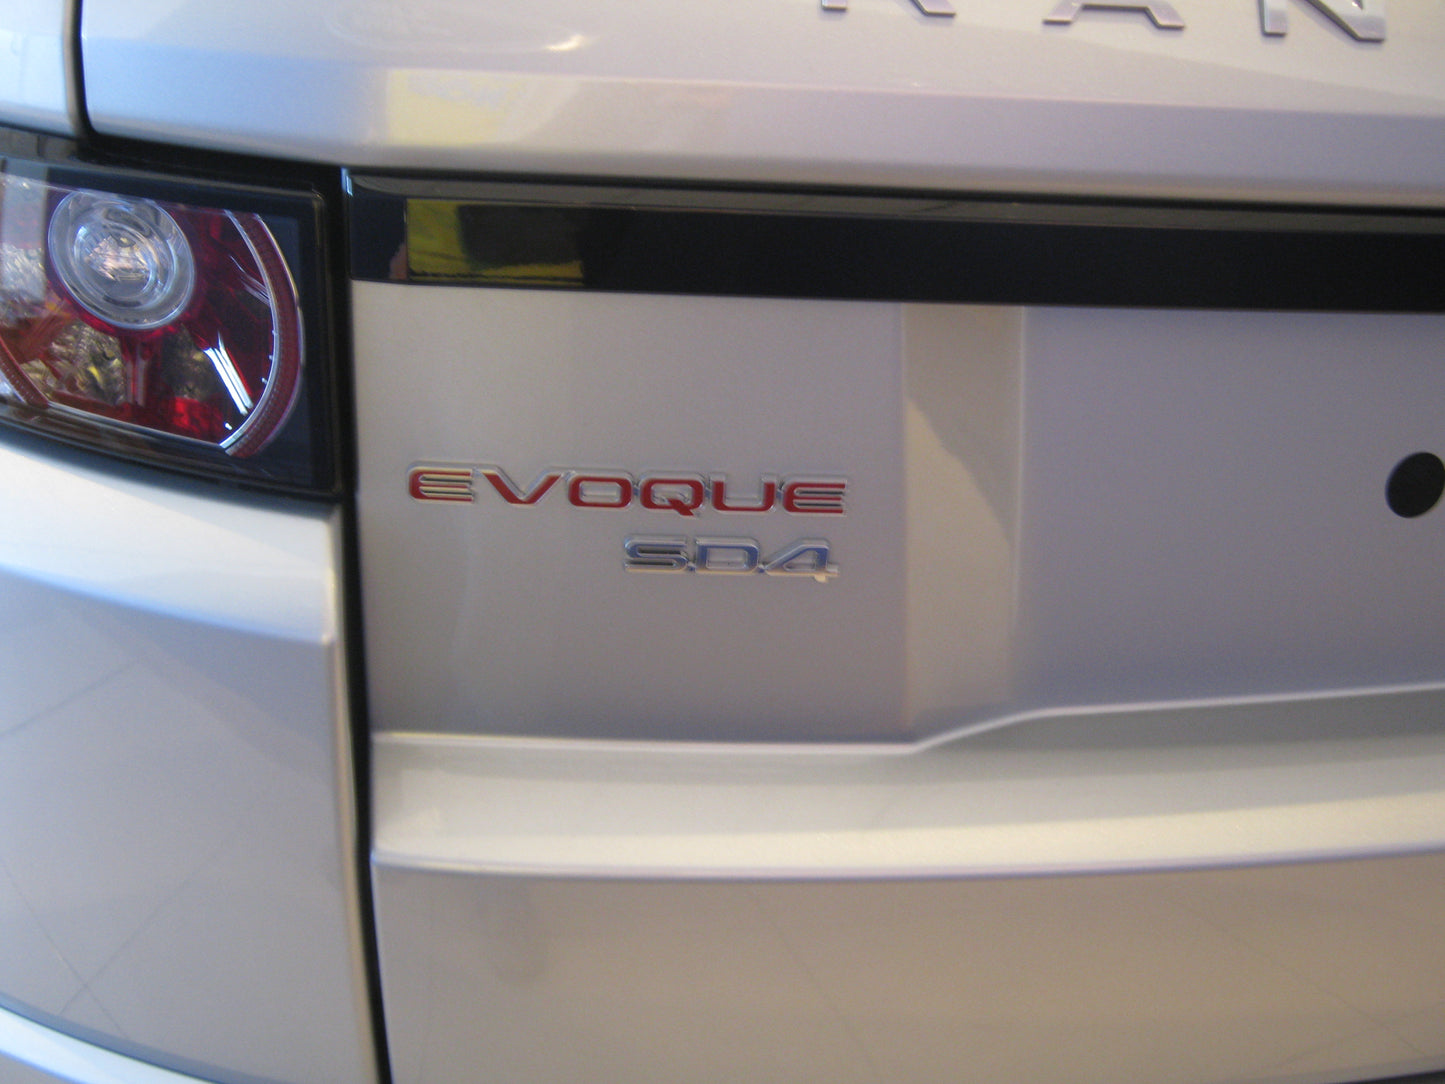 Genuine "EVOQUE SD4" Rear Badge - Red for Range Rover Evoque